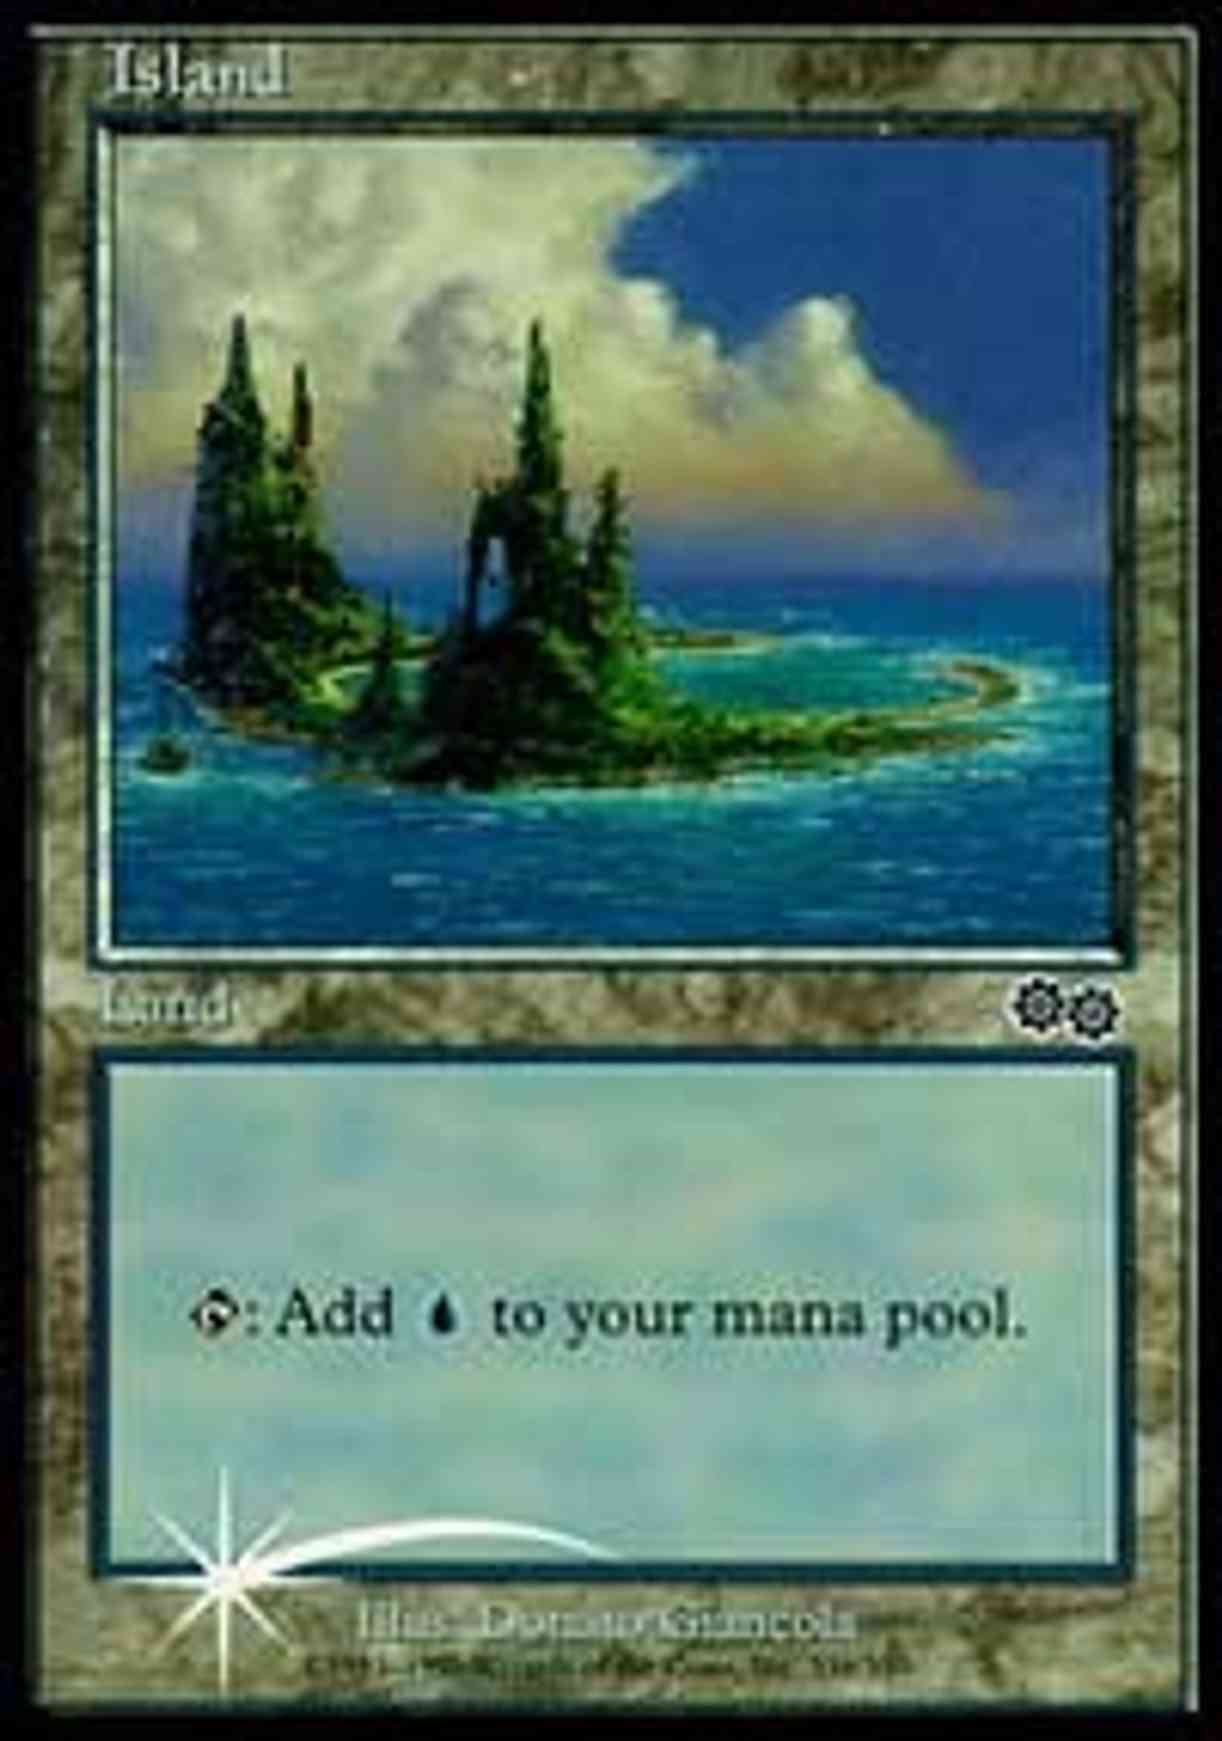 Island (1999) magic card front